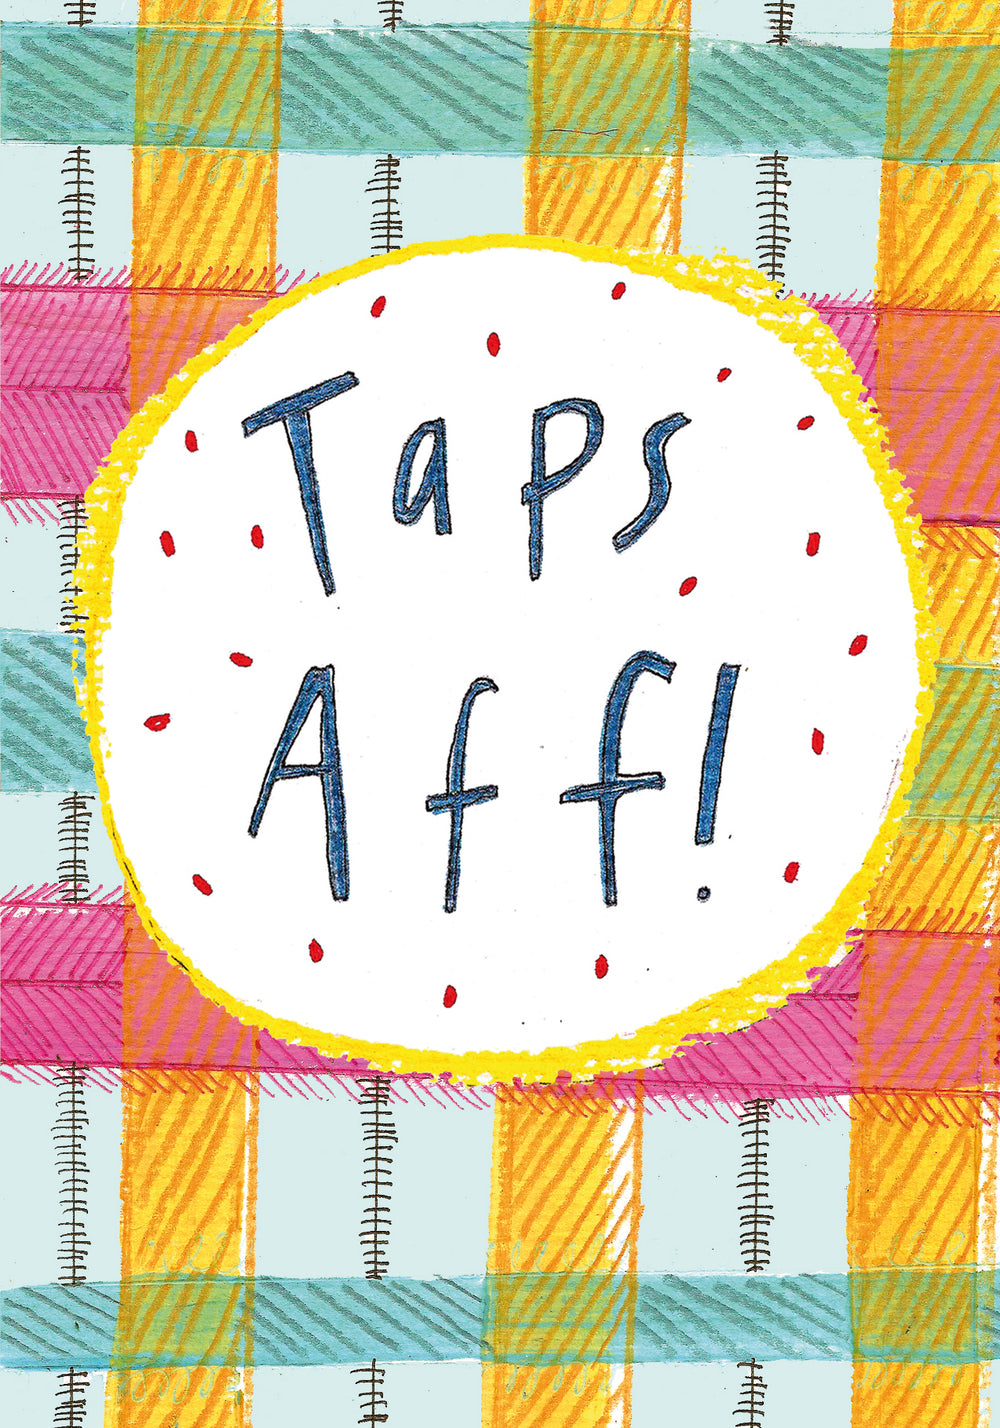 TAPS AFF Greetings Card